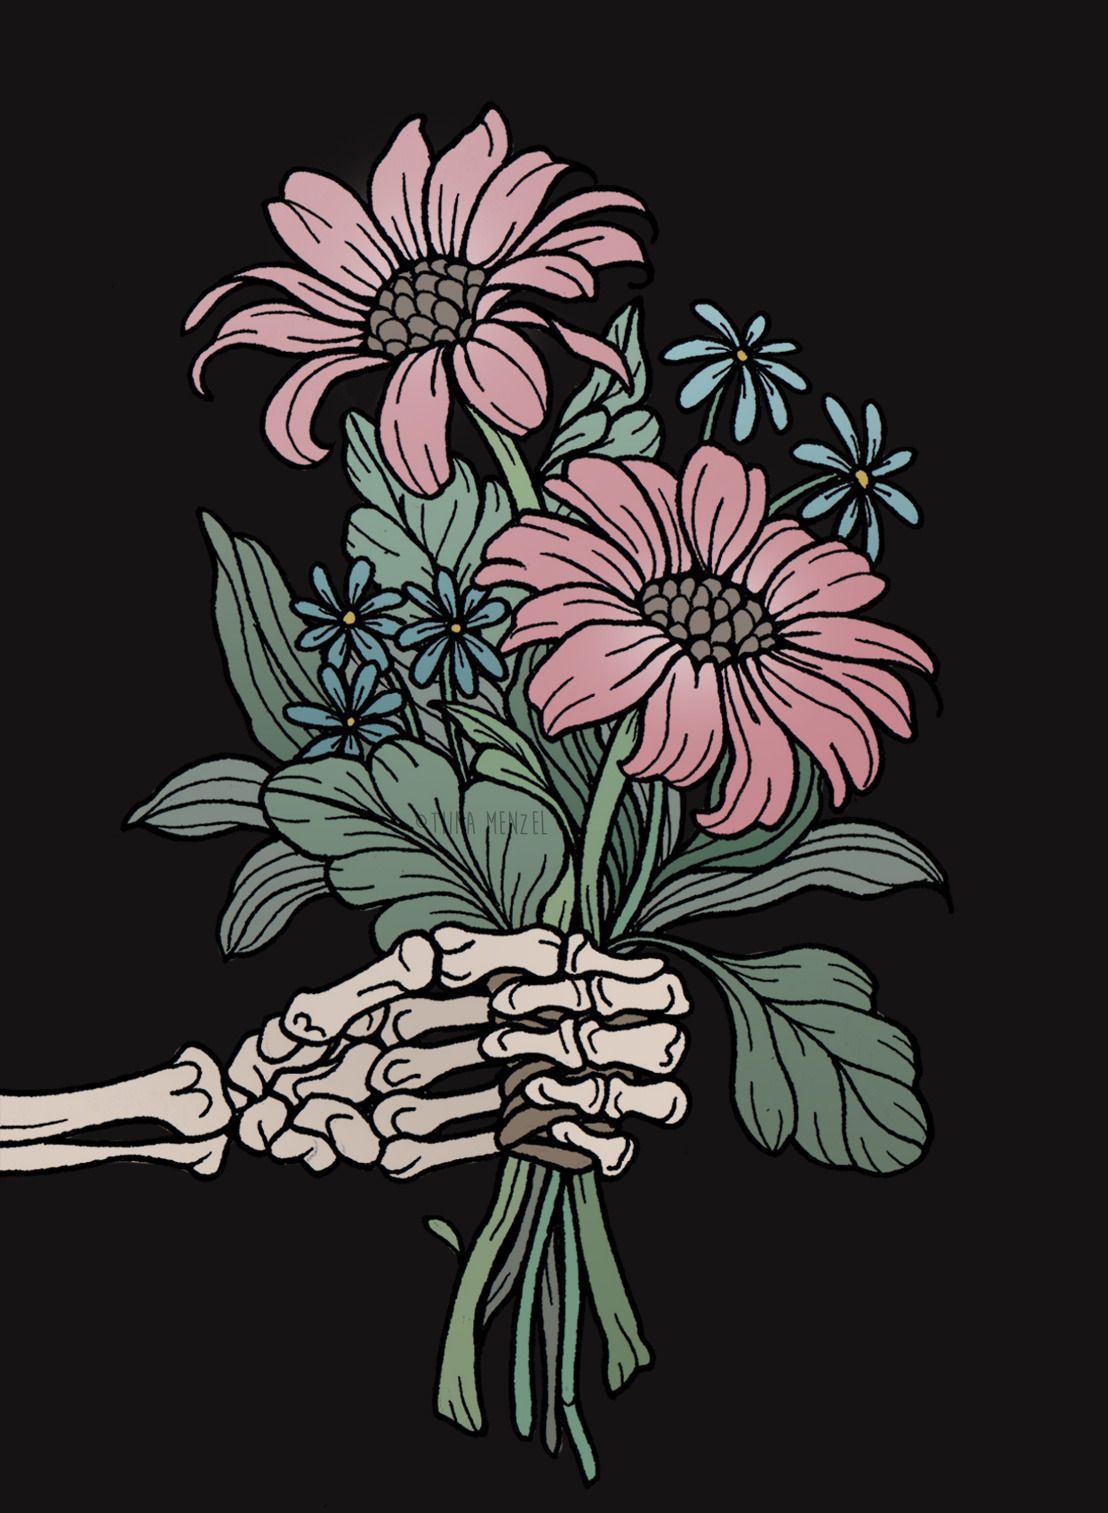 A skeleton holding flowers in one hand - Skeleton, creepy, spooky